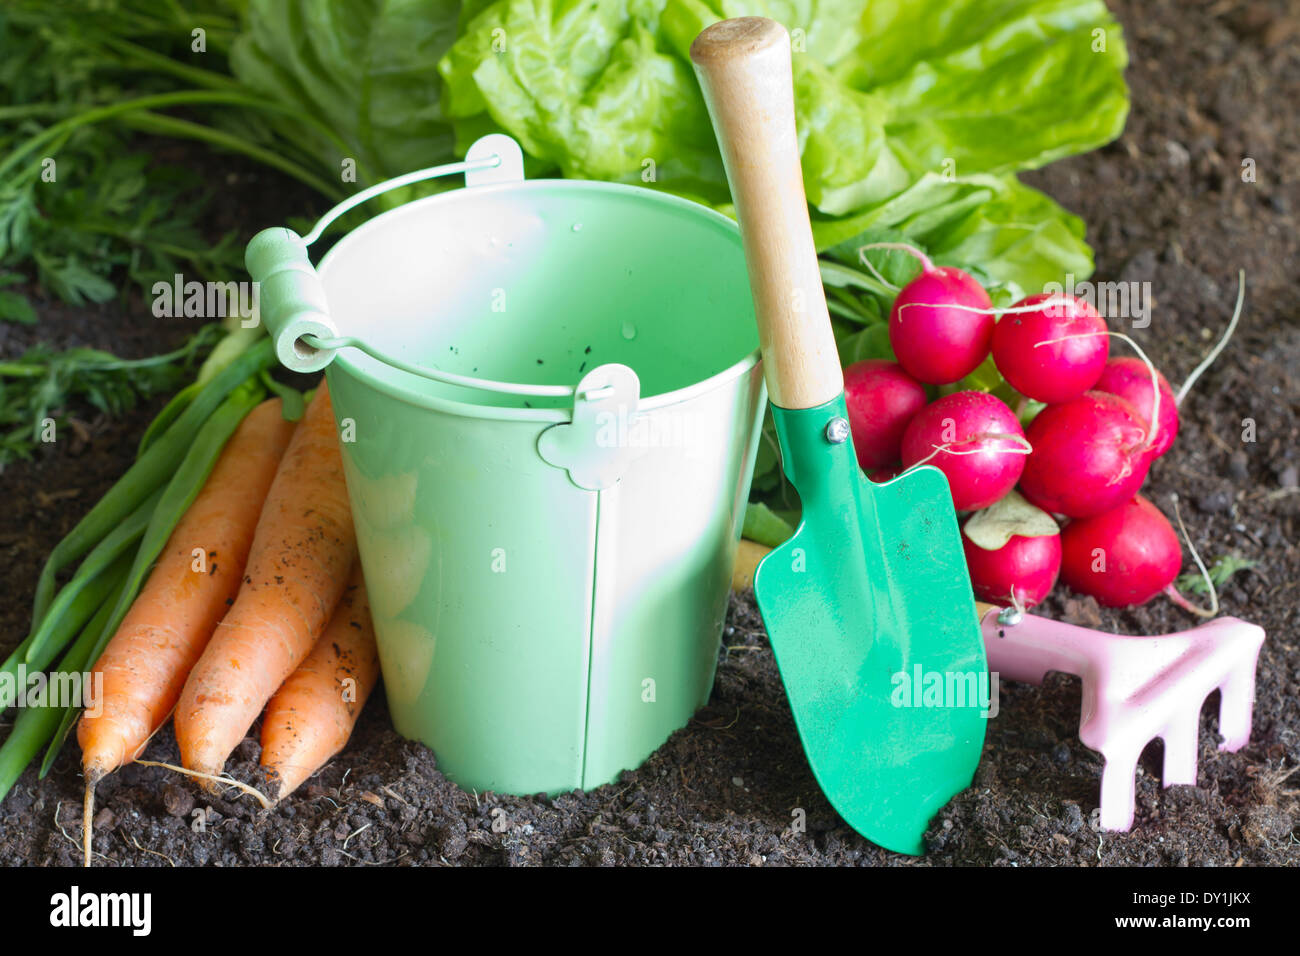 Fresh spring organic vegetables on the soil in the garden concept Stock Photo